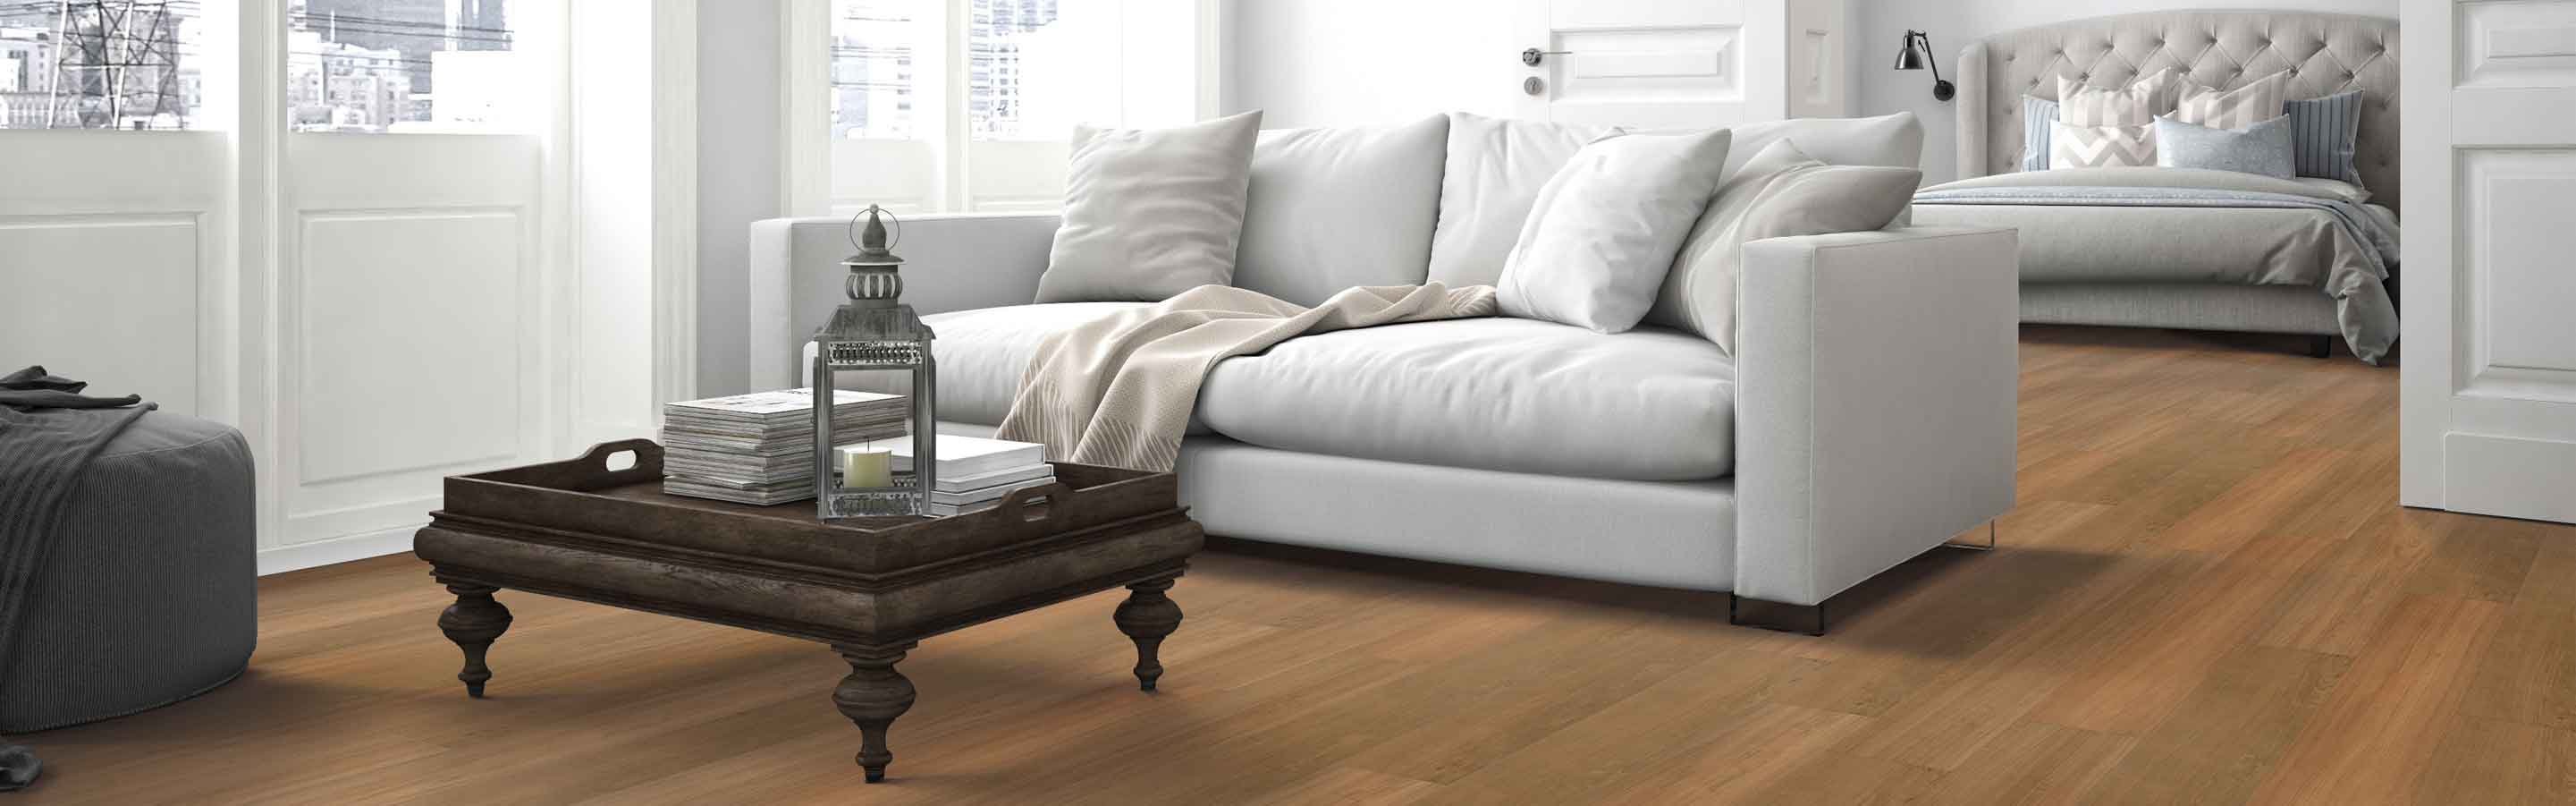 vinyl plank floors in a living room and bedroom